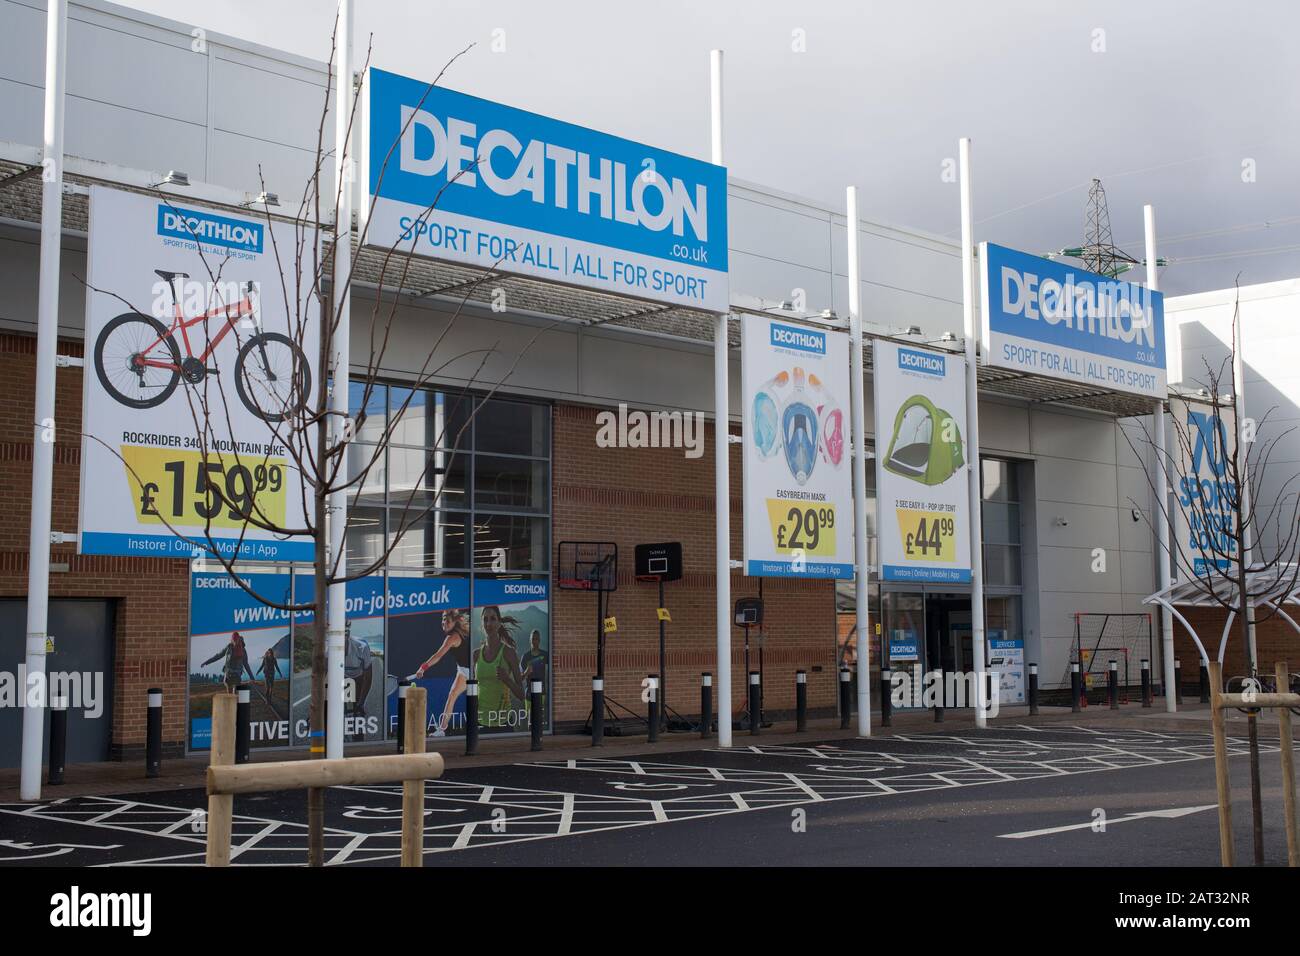 Decathlon, Oxford, UK Stock Photo 